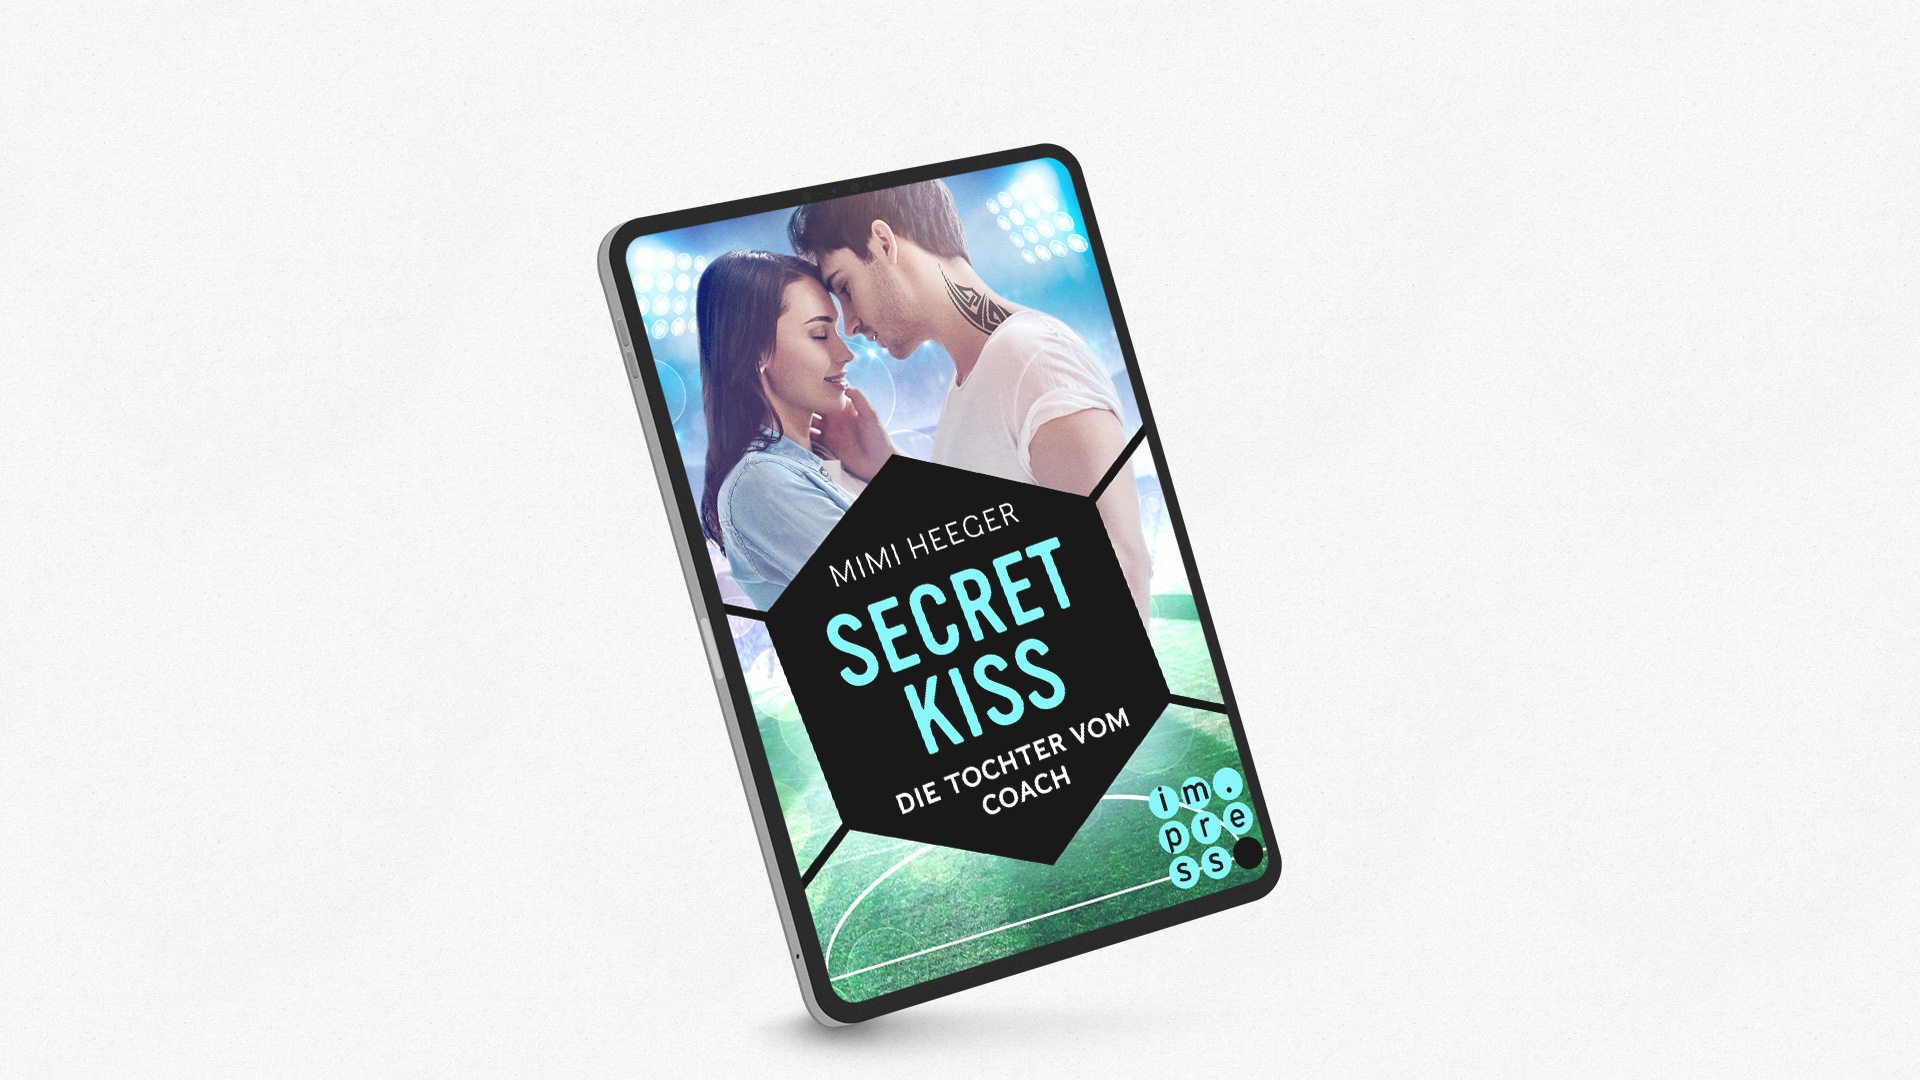 Secret Kiss